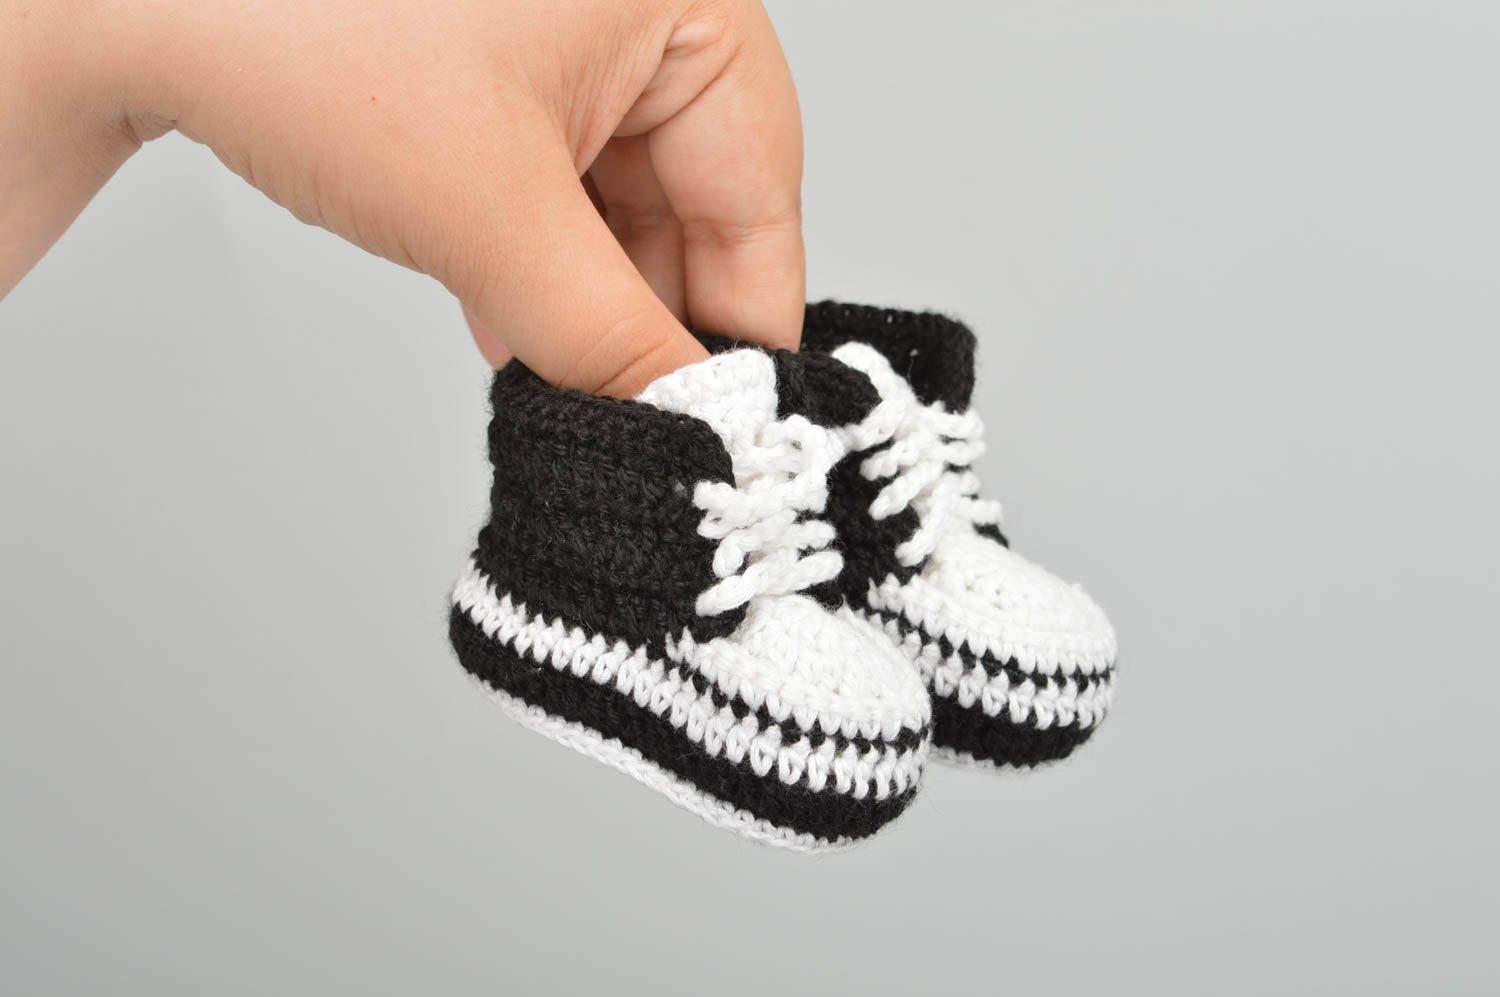 Beautiful handmade crochet baby booties warm baby booties cute baby outfits photo 1